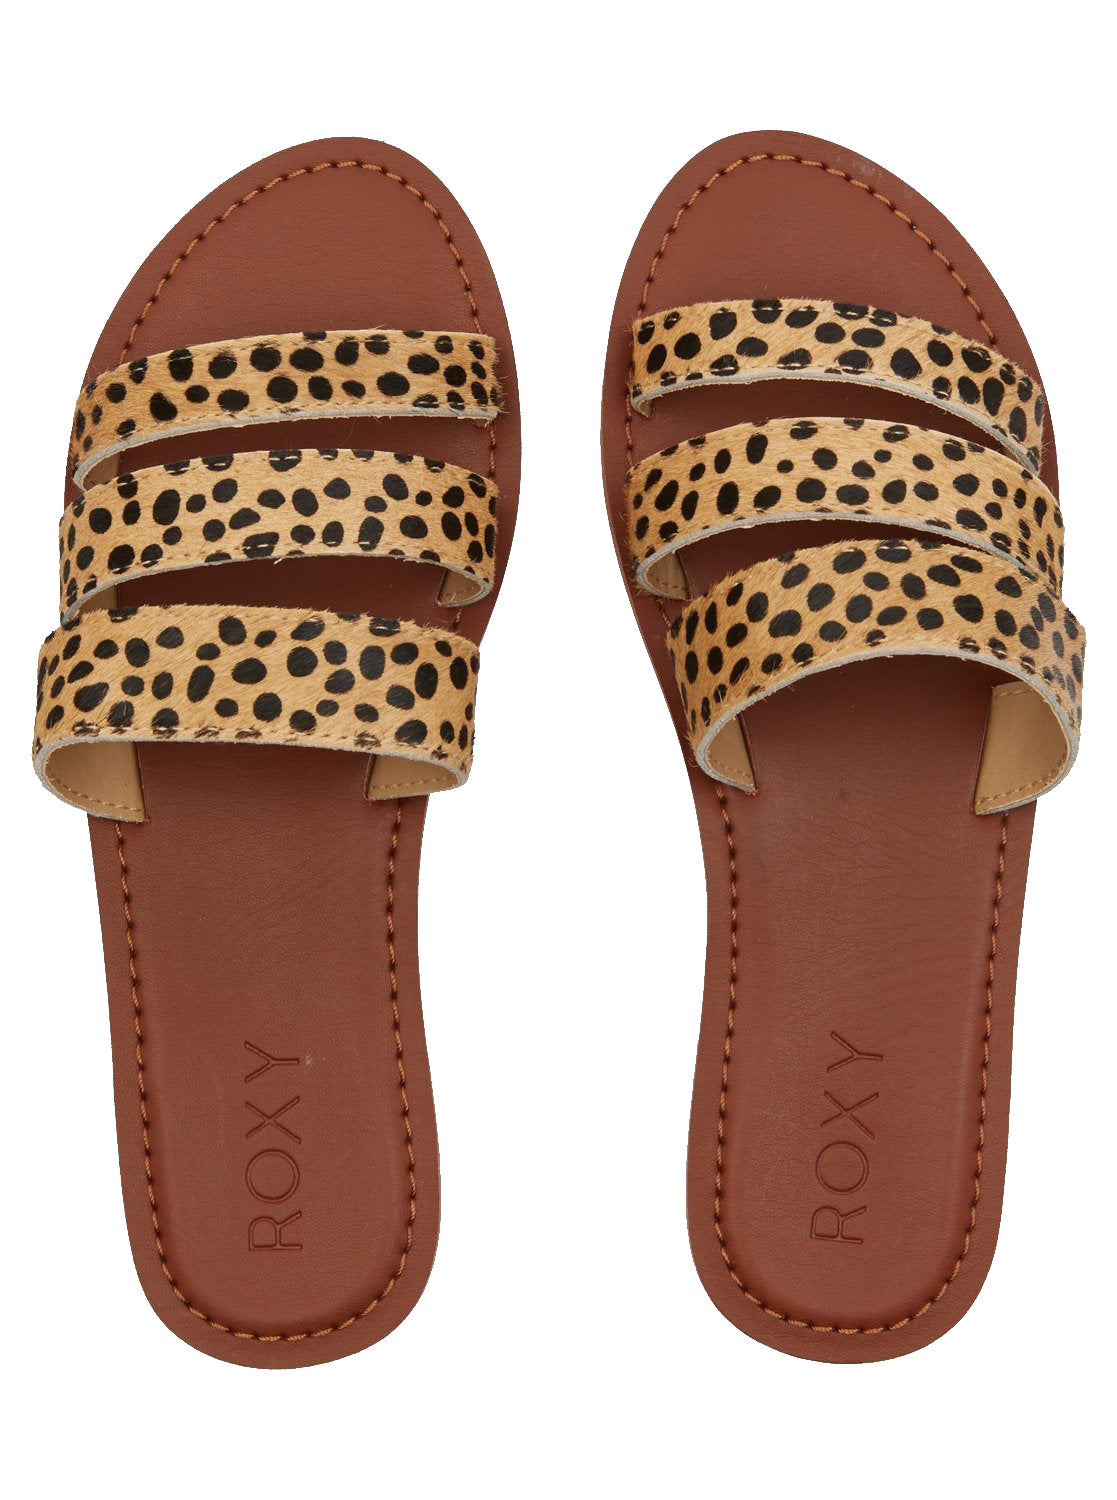 Roxy Wyld Rose 2 Womens Sandal CHE-Cheetah Print 8